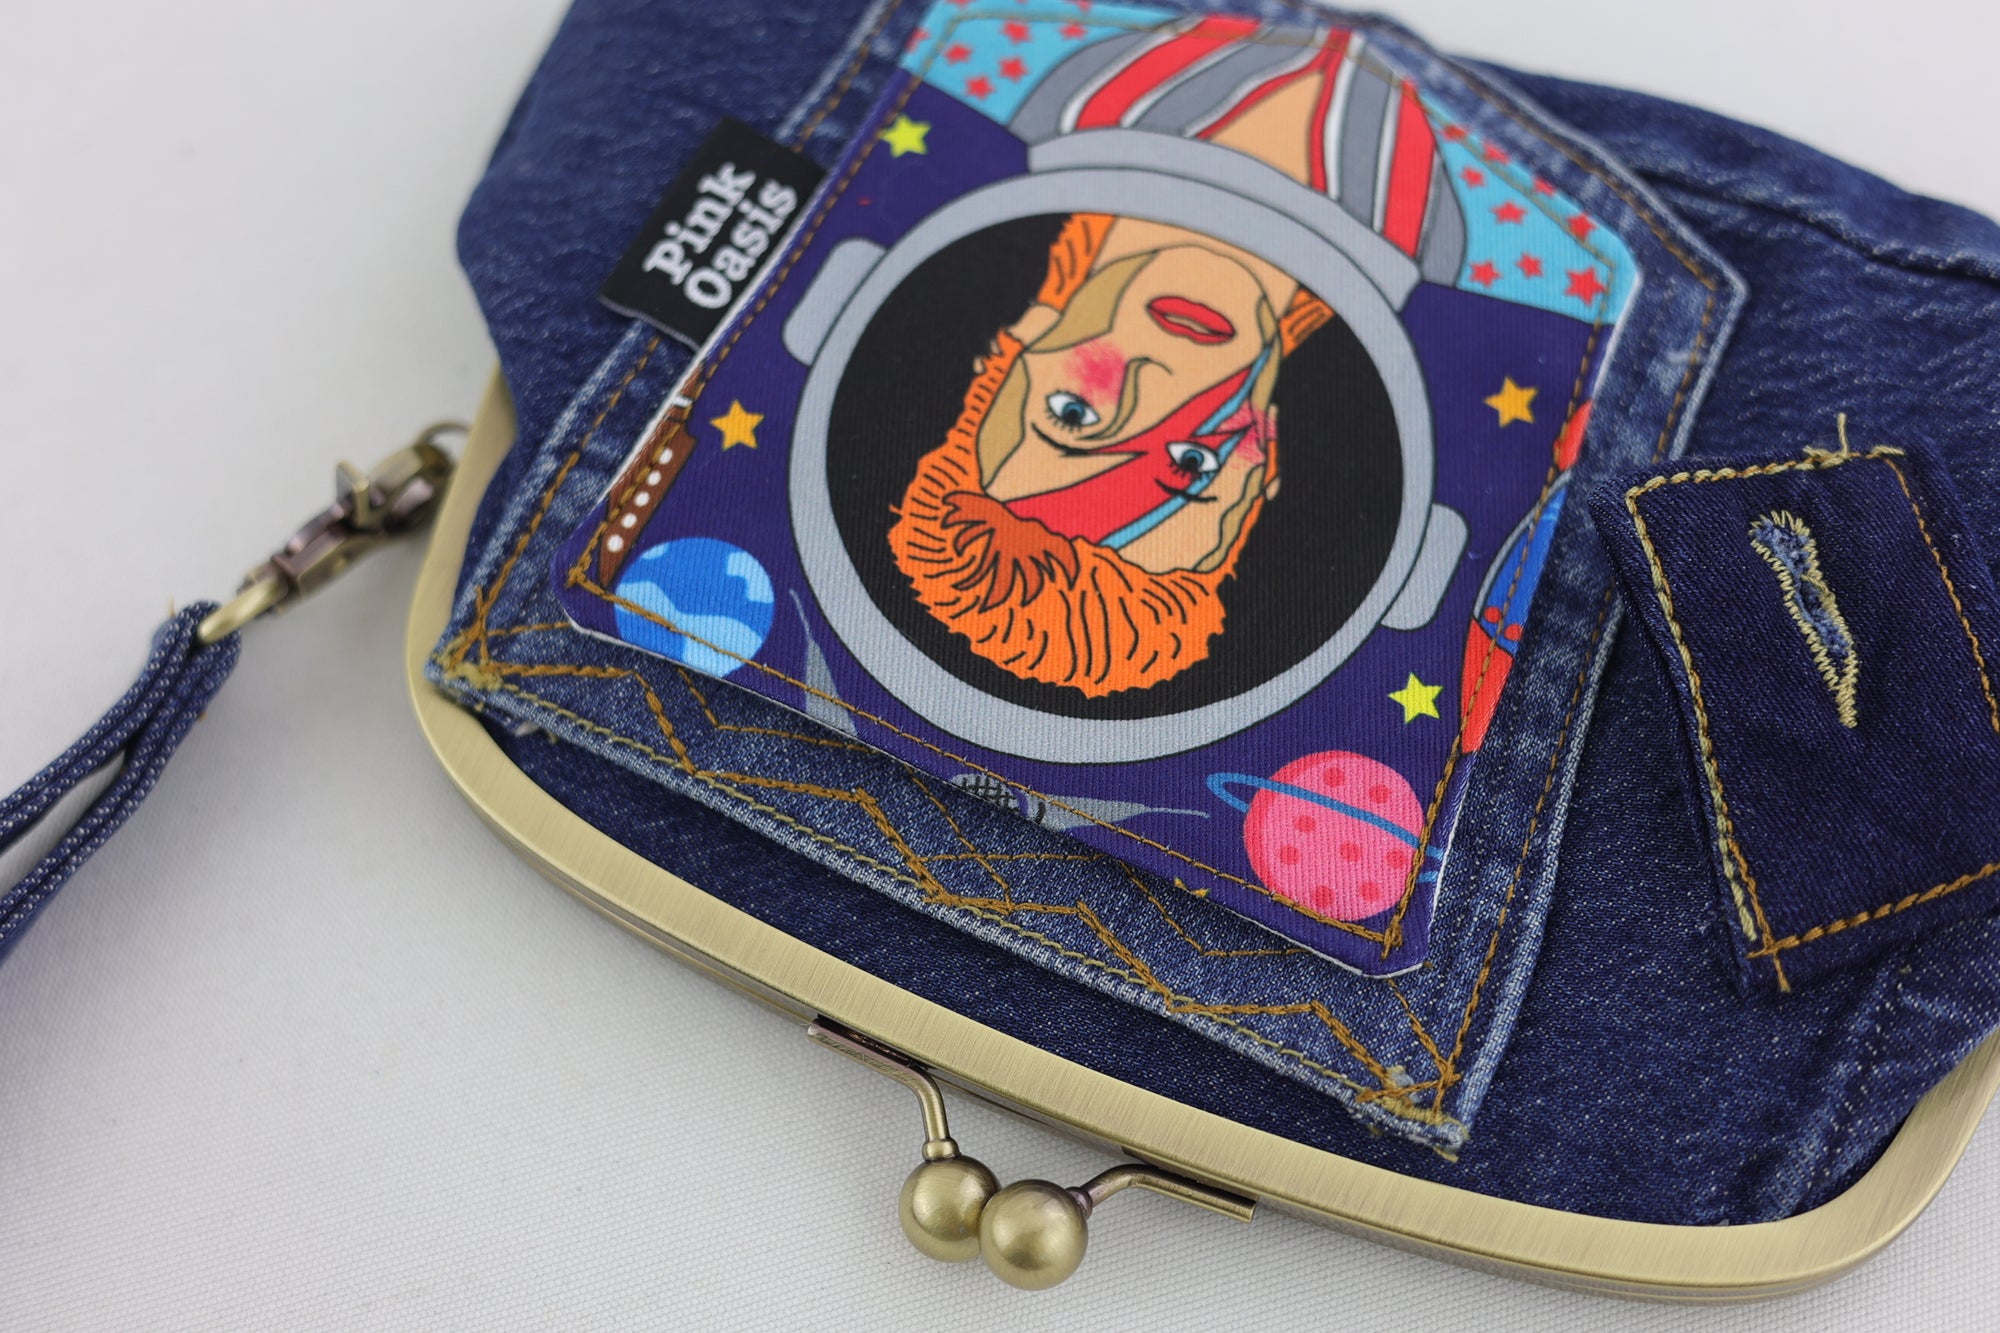 David's Space Denim Wristlet Wallet (with Double Kisslock Clasps)